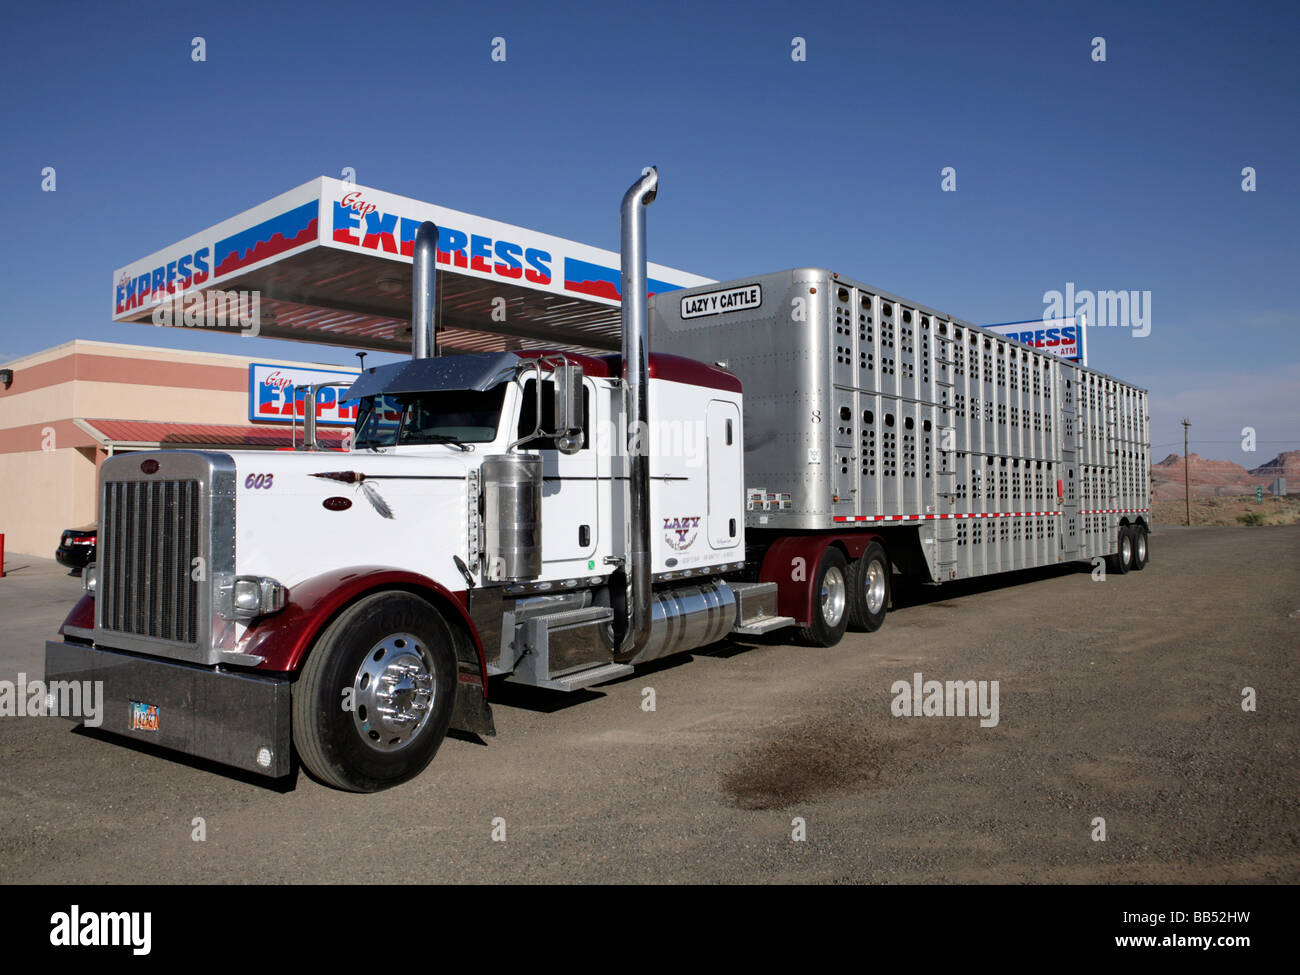 Cattle truck at gas station, Arizona Stock Photo